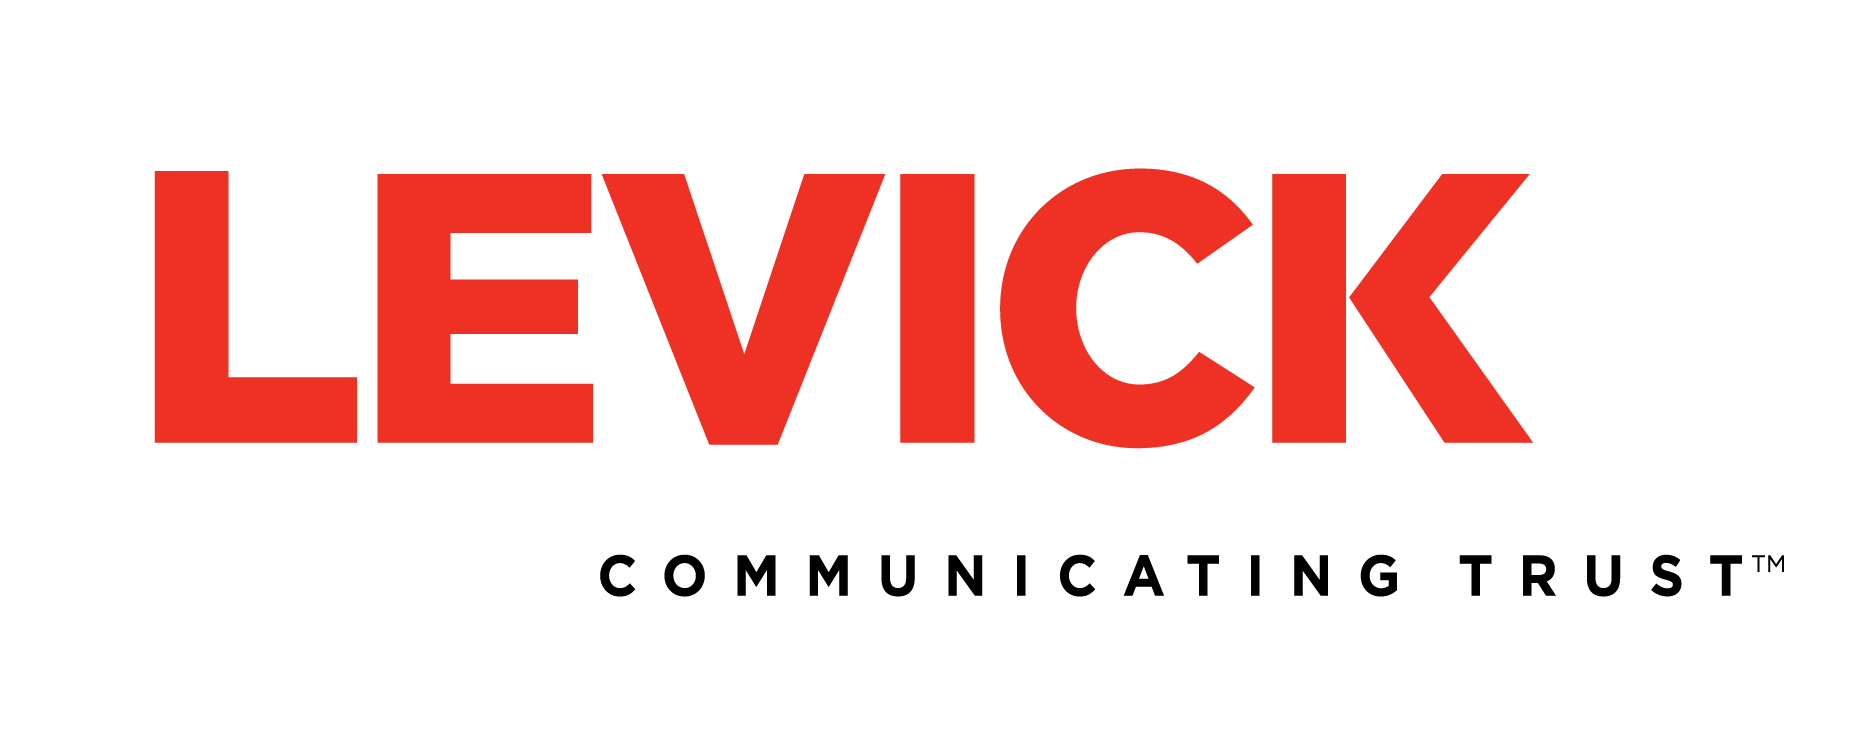  Best Corporate PR Agency Logo: Levick